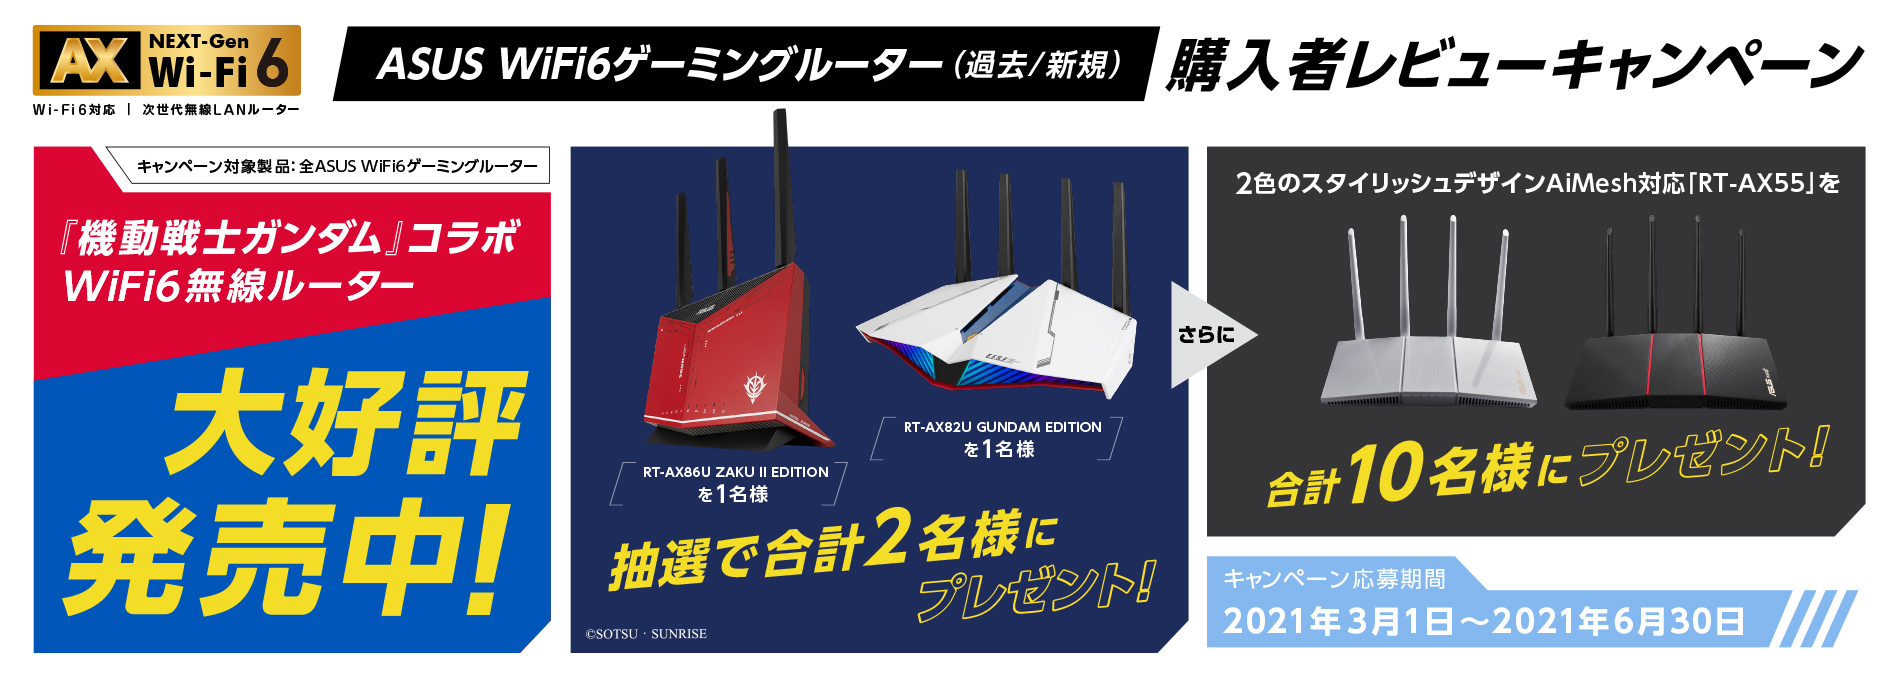 ASUS WiFi6ゲーミングルーター(過去/新規)購入者レビューキャンペーン